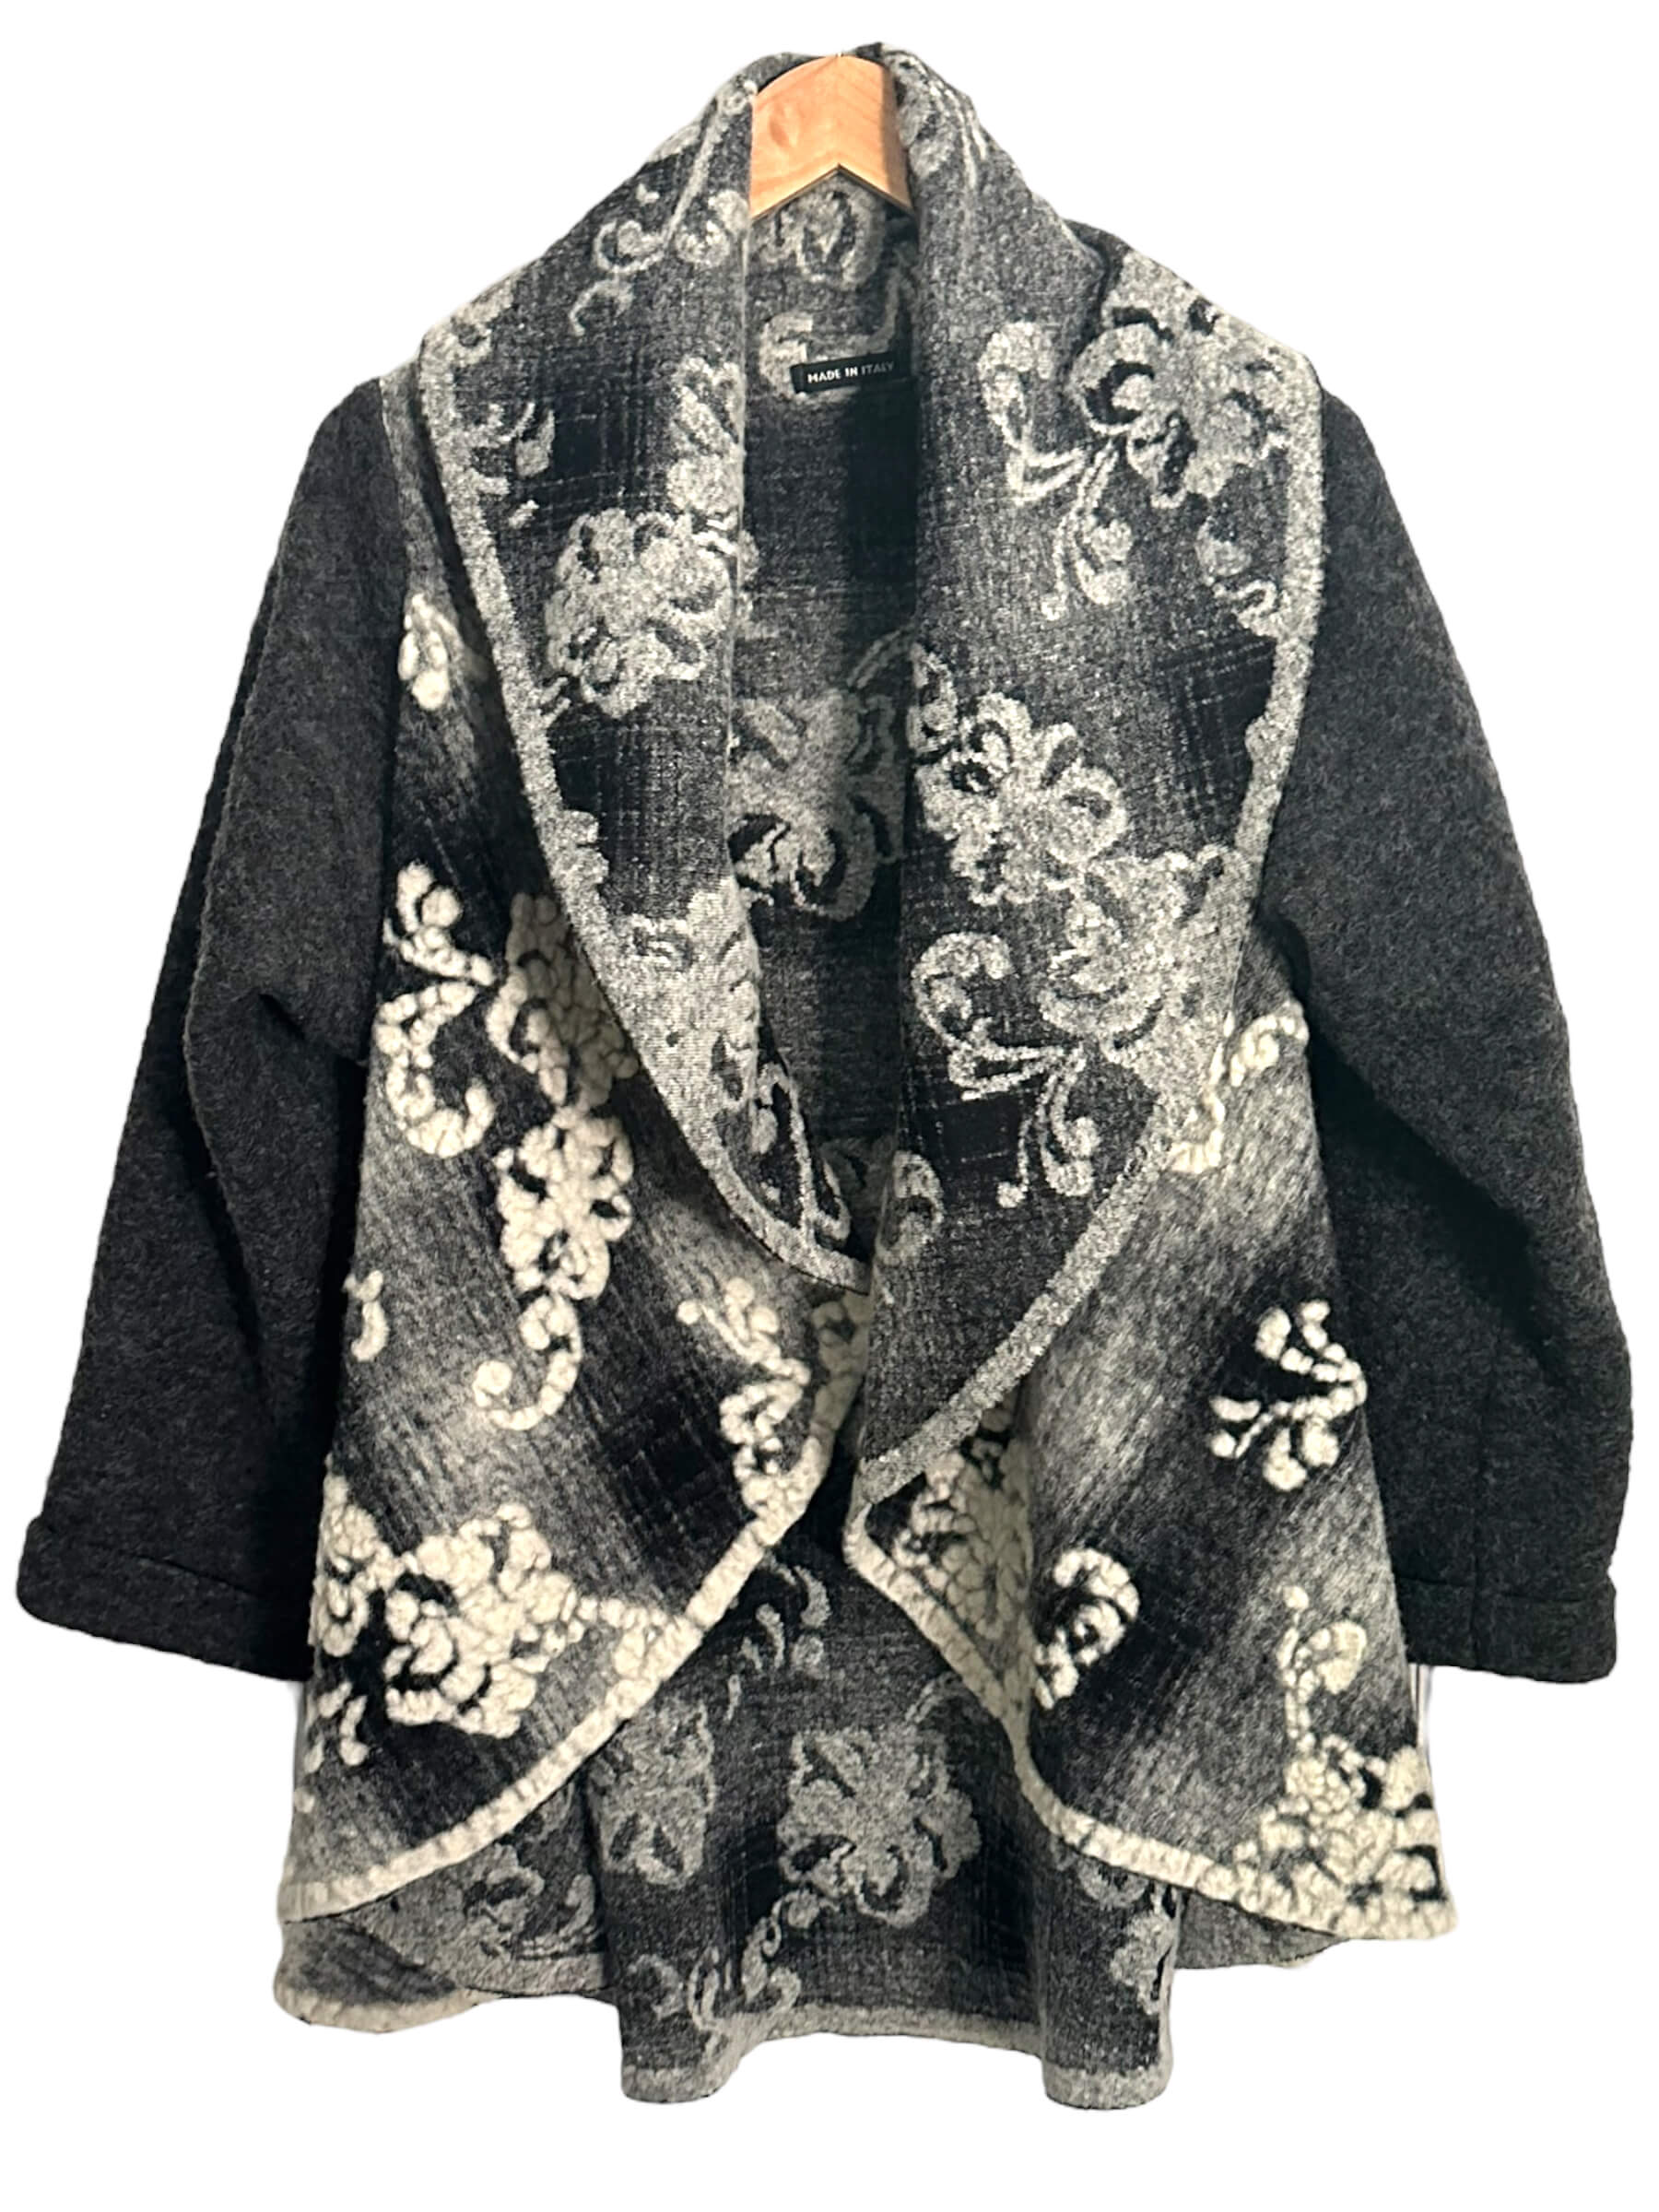 Soft Autumn floral plaid gray Italian wool knit coat